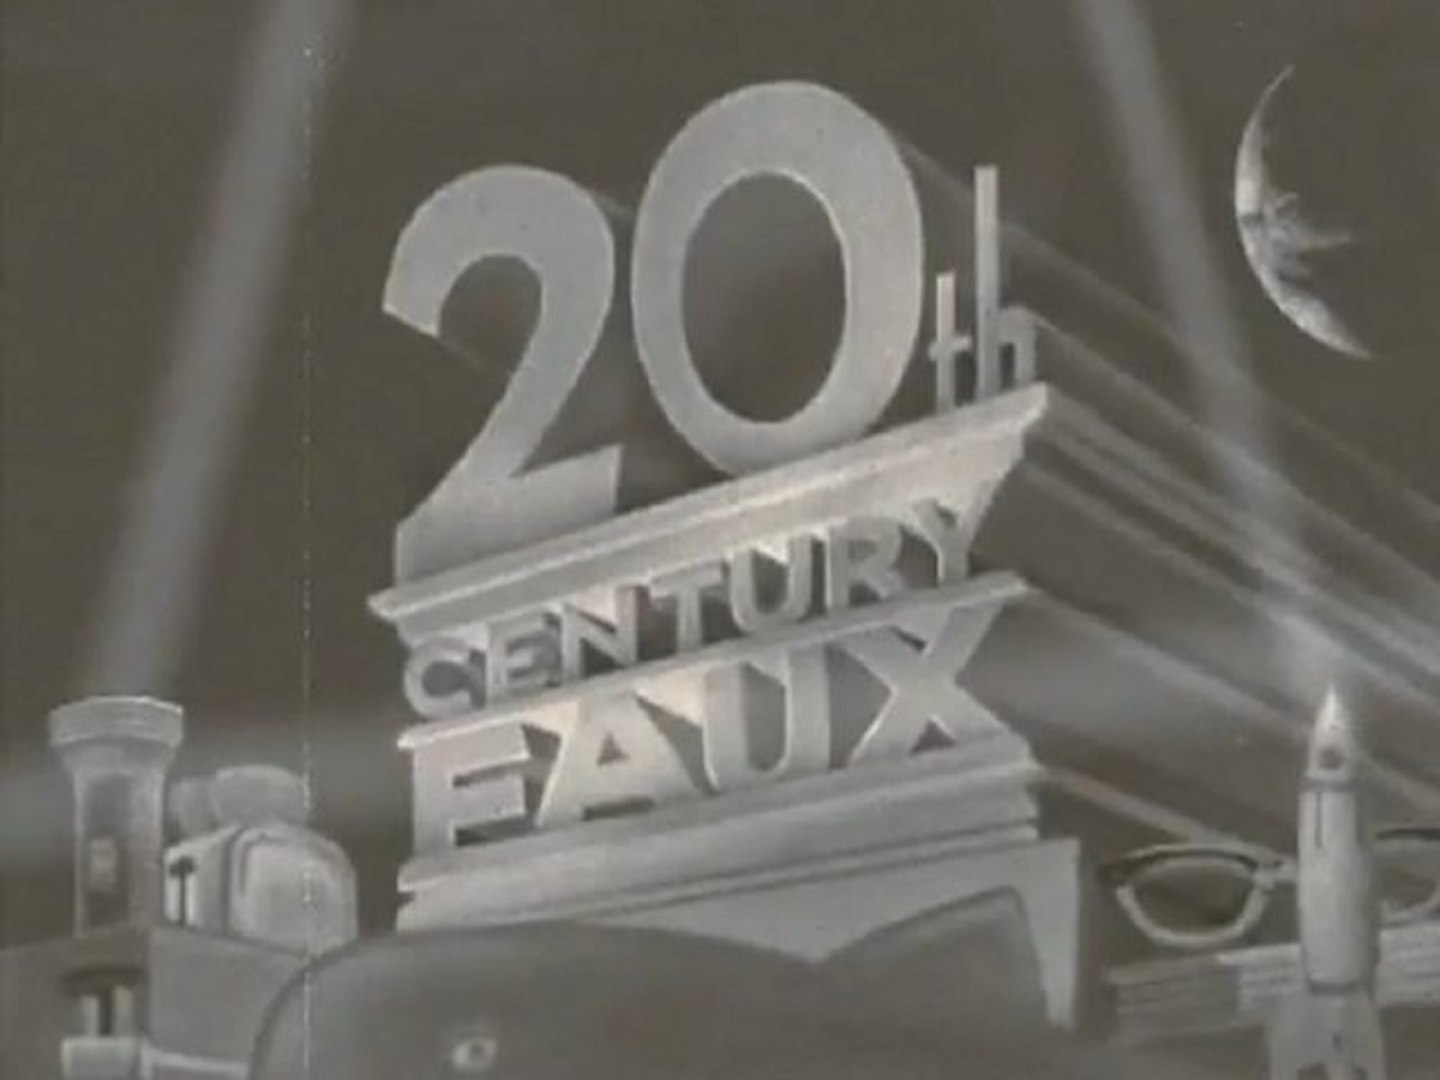 20th Century Fox (2010) logo - video Dailymotion